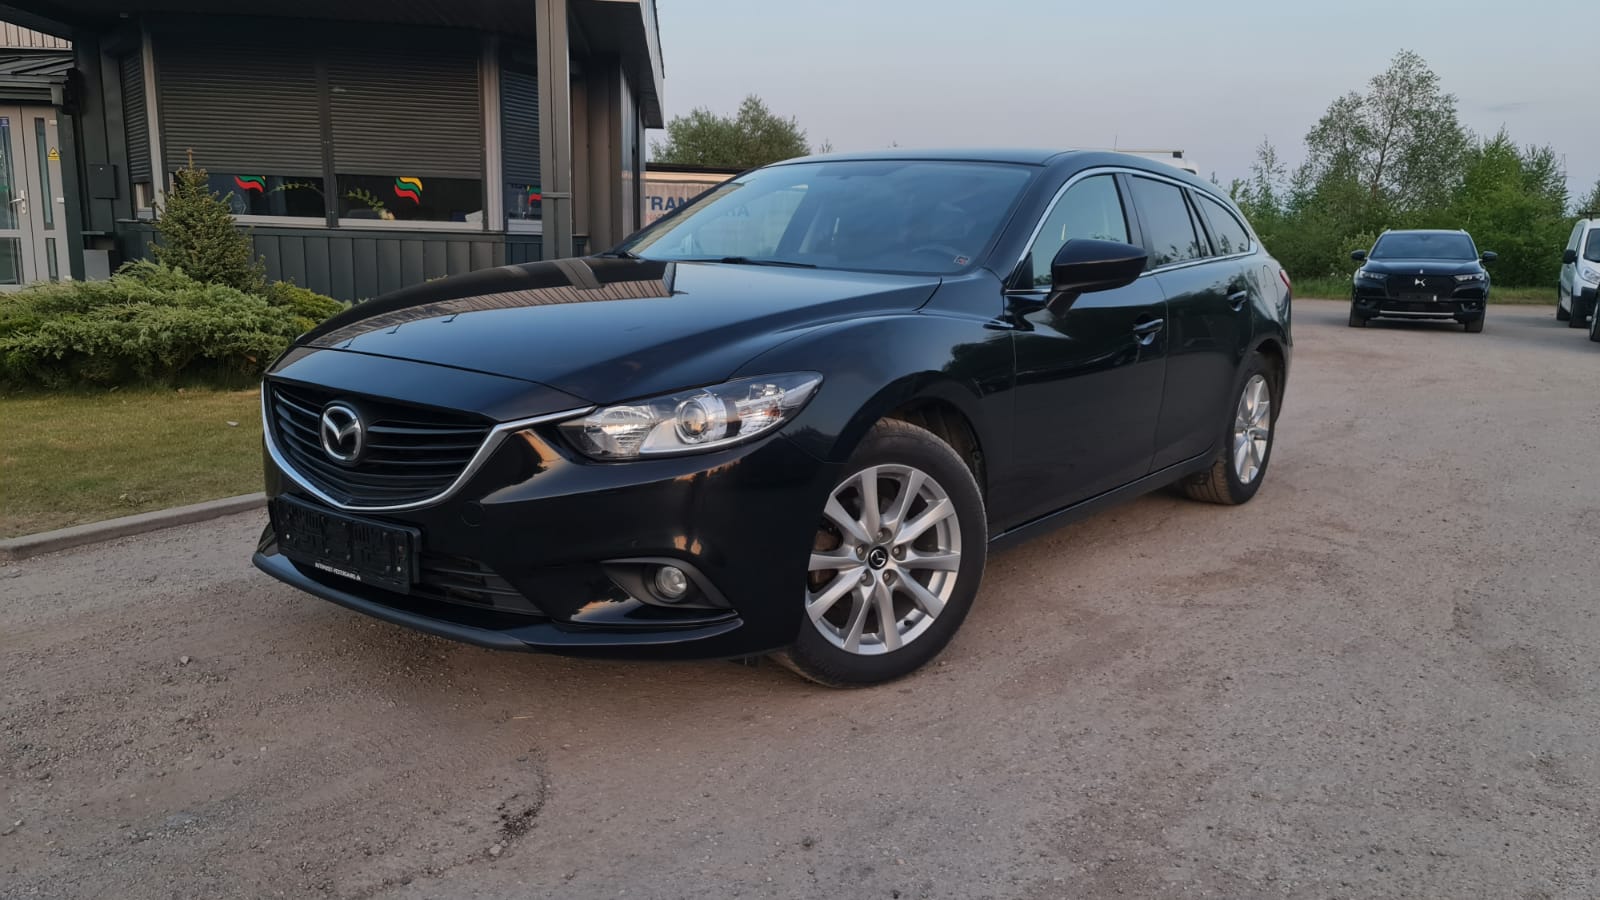 Mazda 6, 2.2 l., universalas, 2015/naudoti automobiliai/Roldana